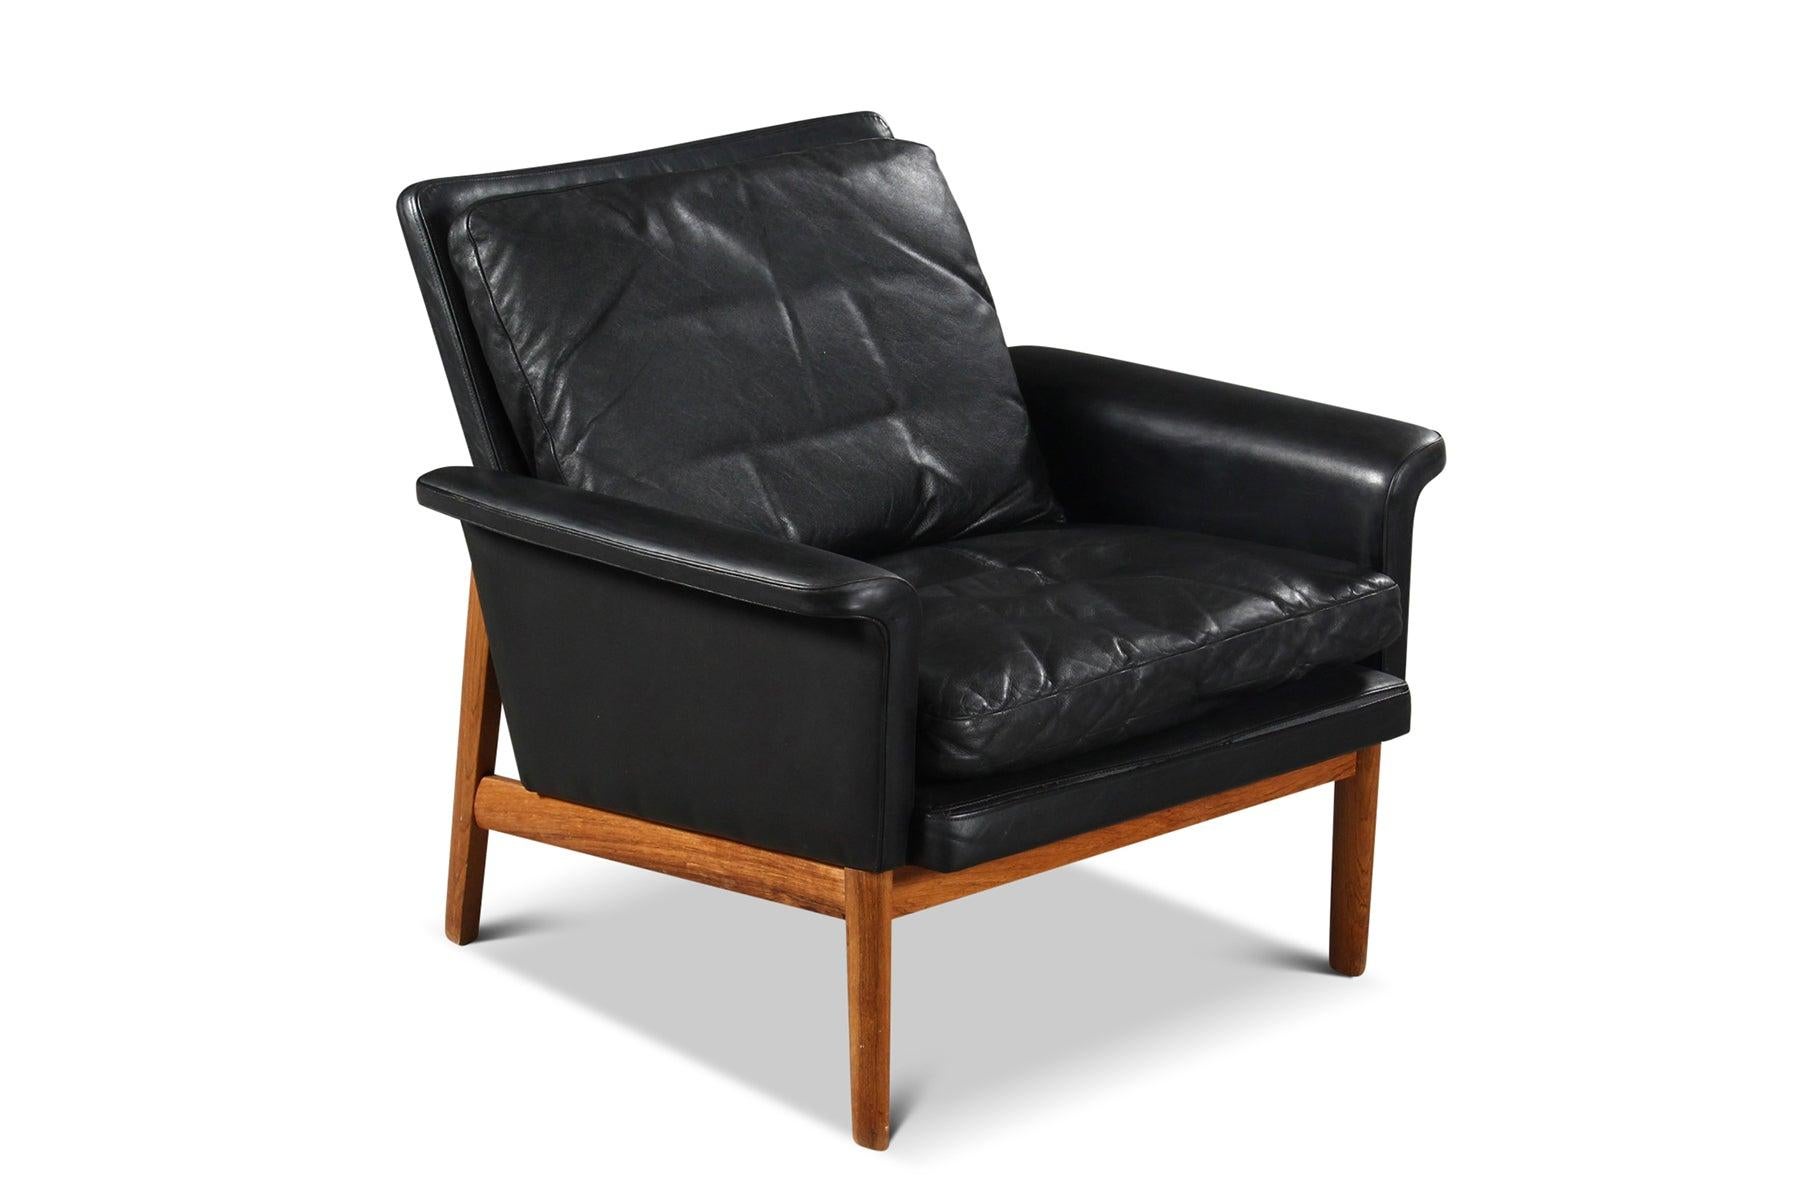 Leather Model 218 Lowback Lounge Chair in Rosewood by Finn Juhl